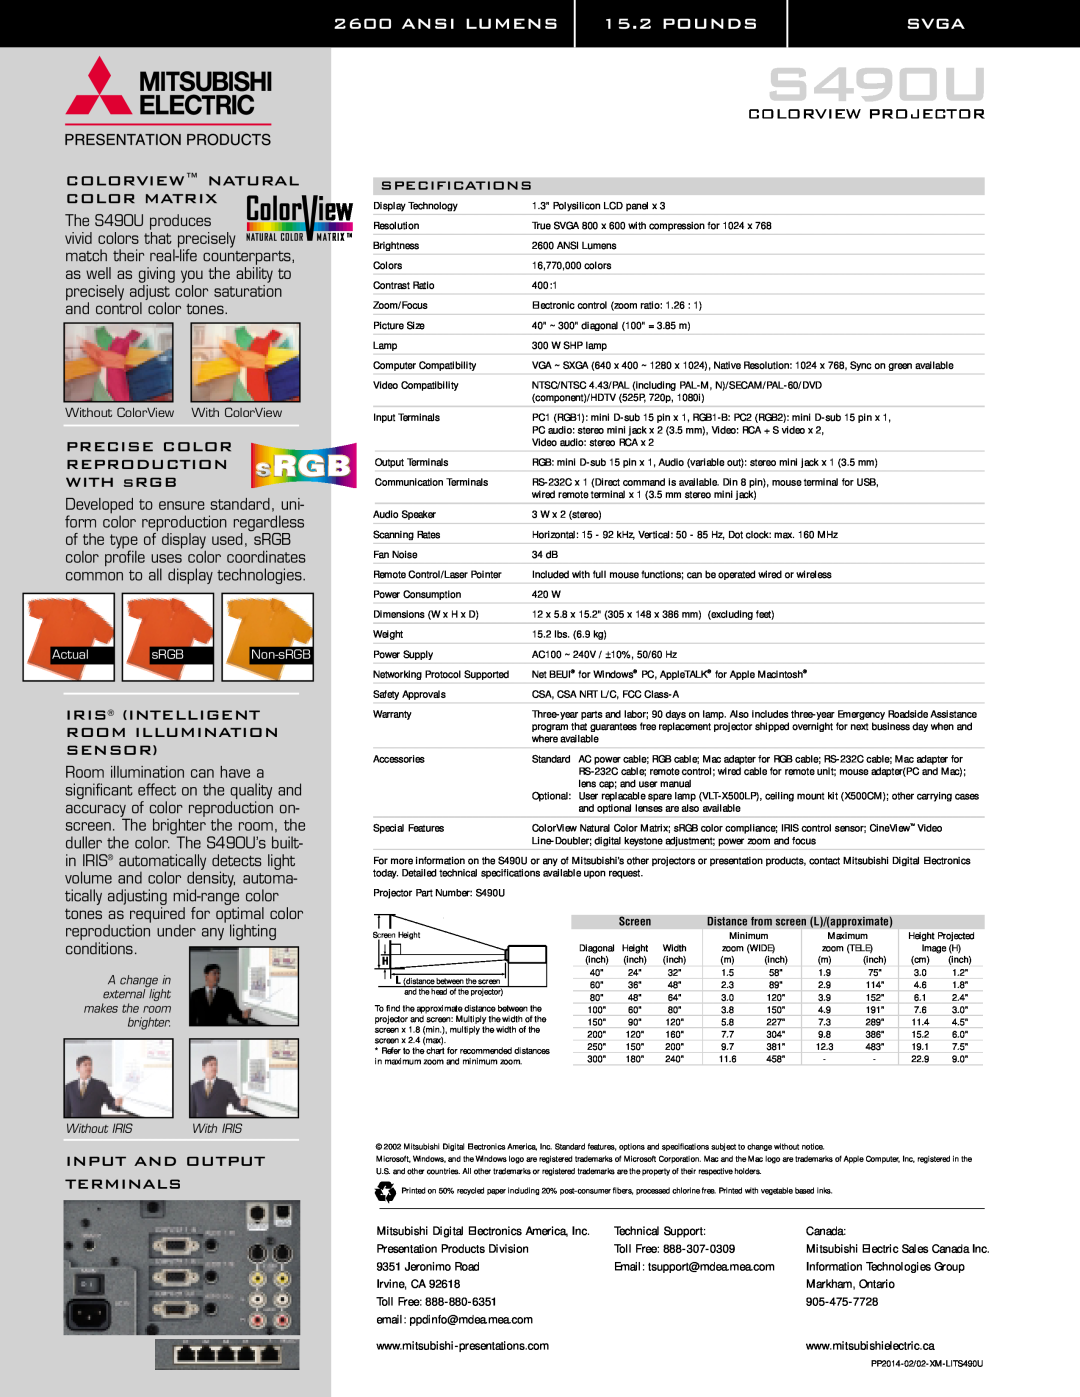 Mitsubishi Electronics S490U ANSI LUMENS 15.2 POUNDS, Colorview Natural Color Matrix, PRECISE COLOR REPRODUCTION WITH sRGB 